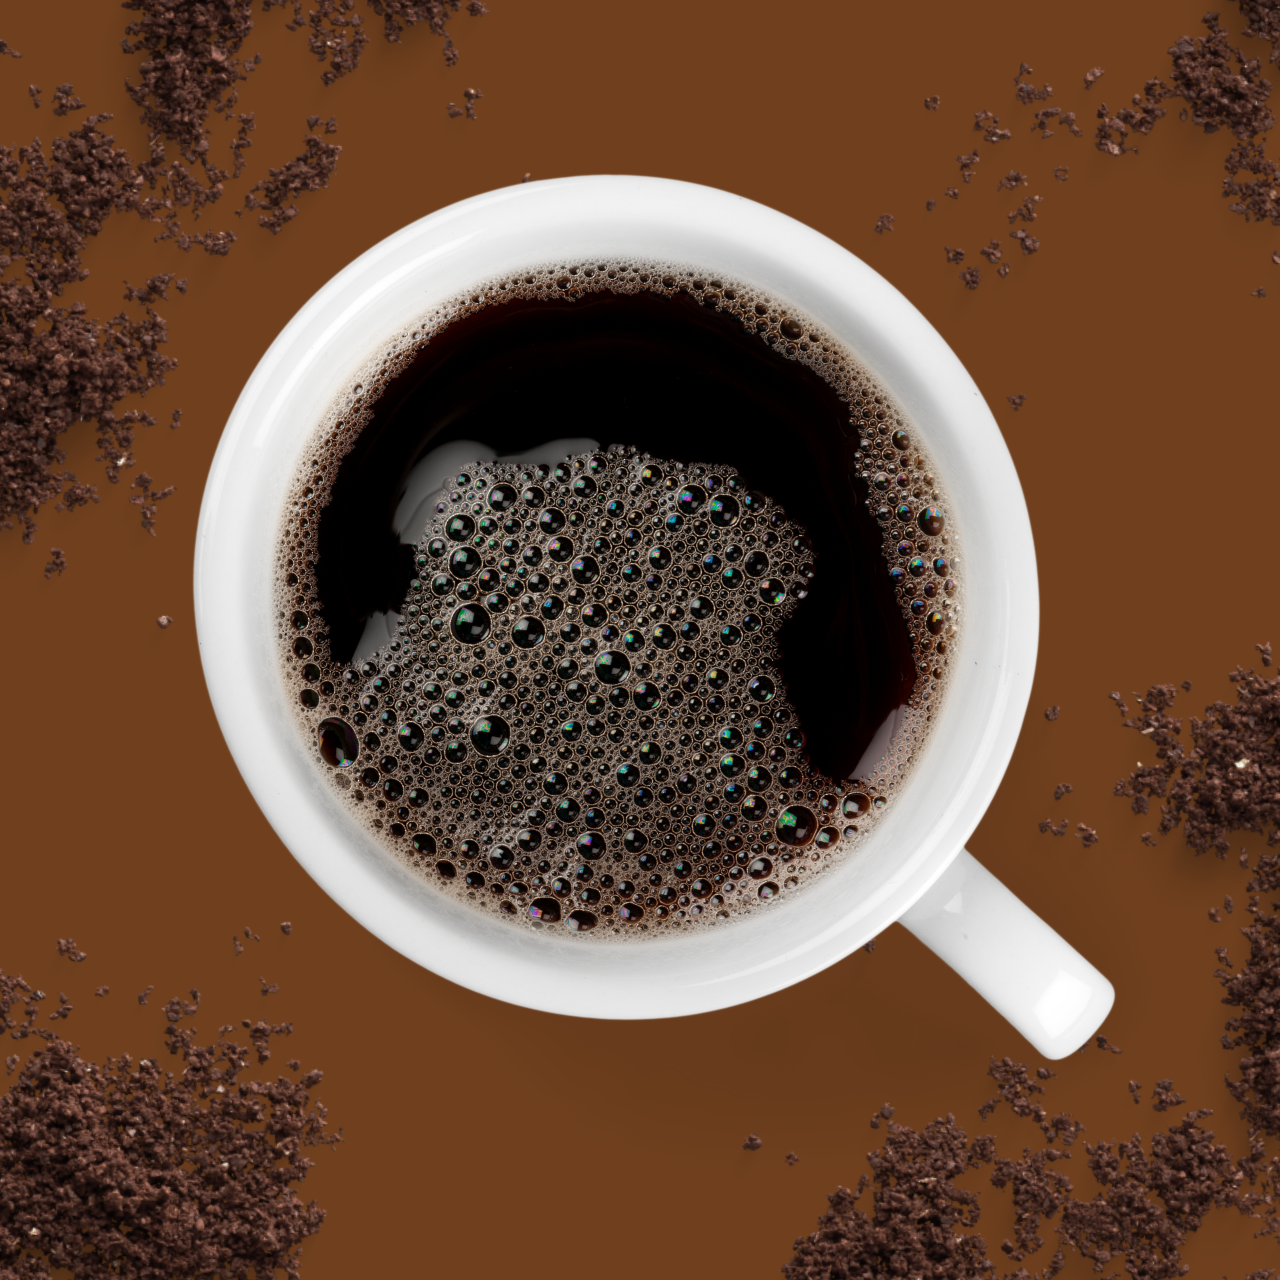 A warm coffee mug invites you to the program.